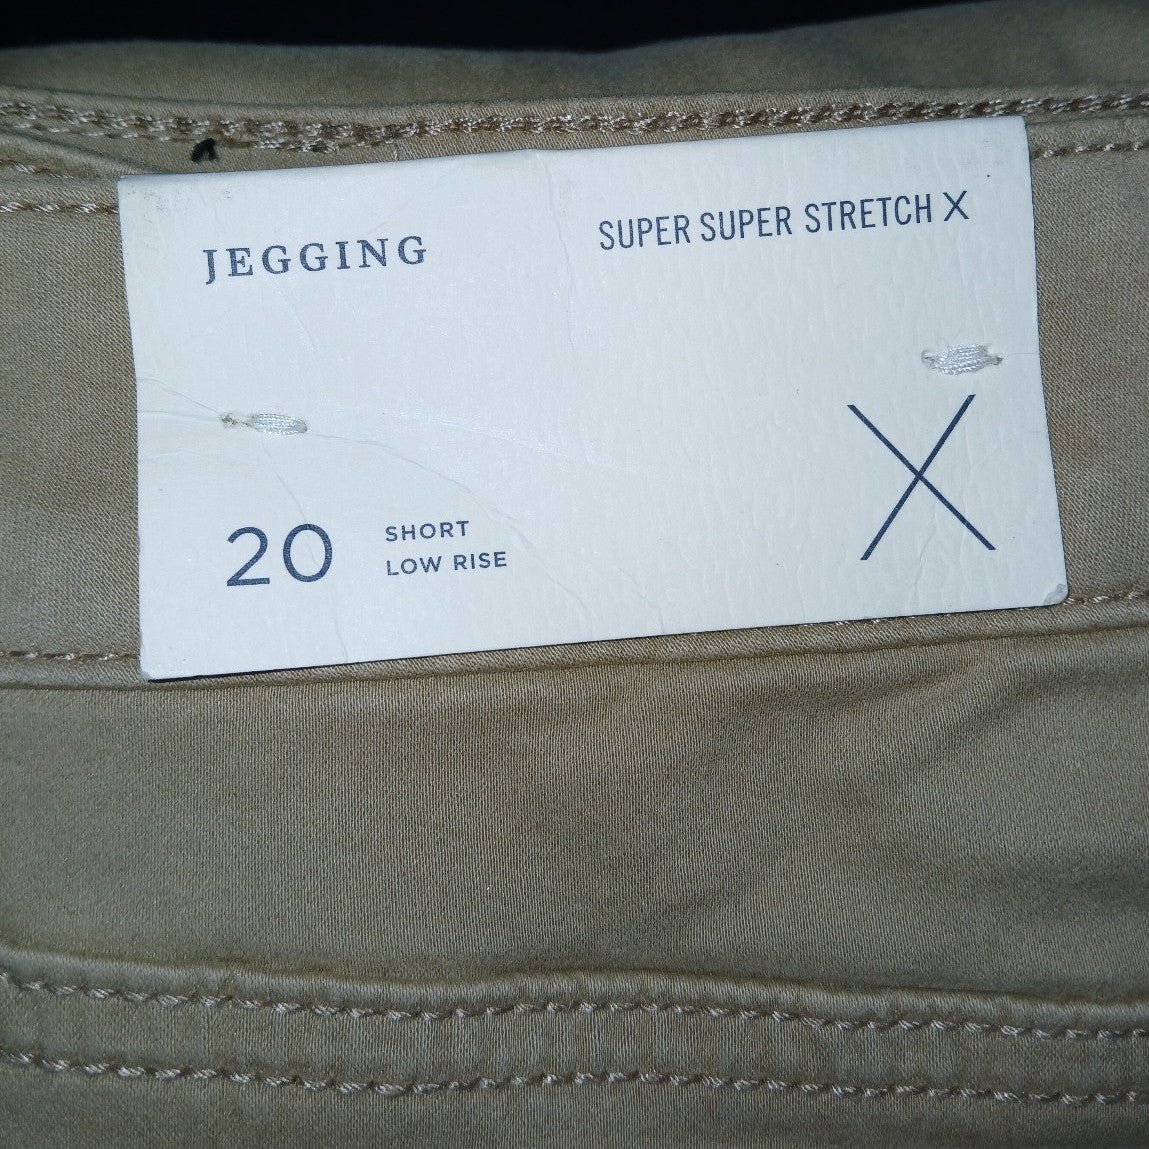 Great NWT American Eagle Super Super Stretch X Jeans LTxOnKhE7 New Style